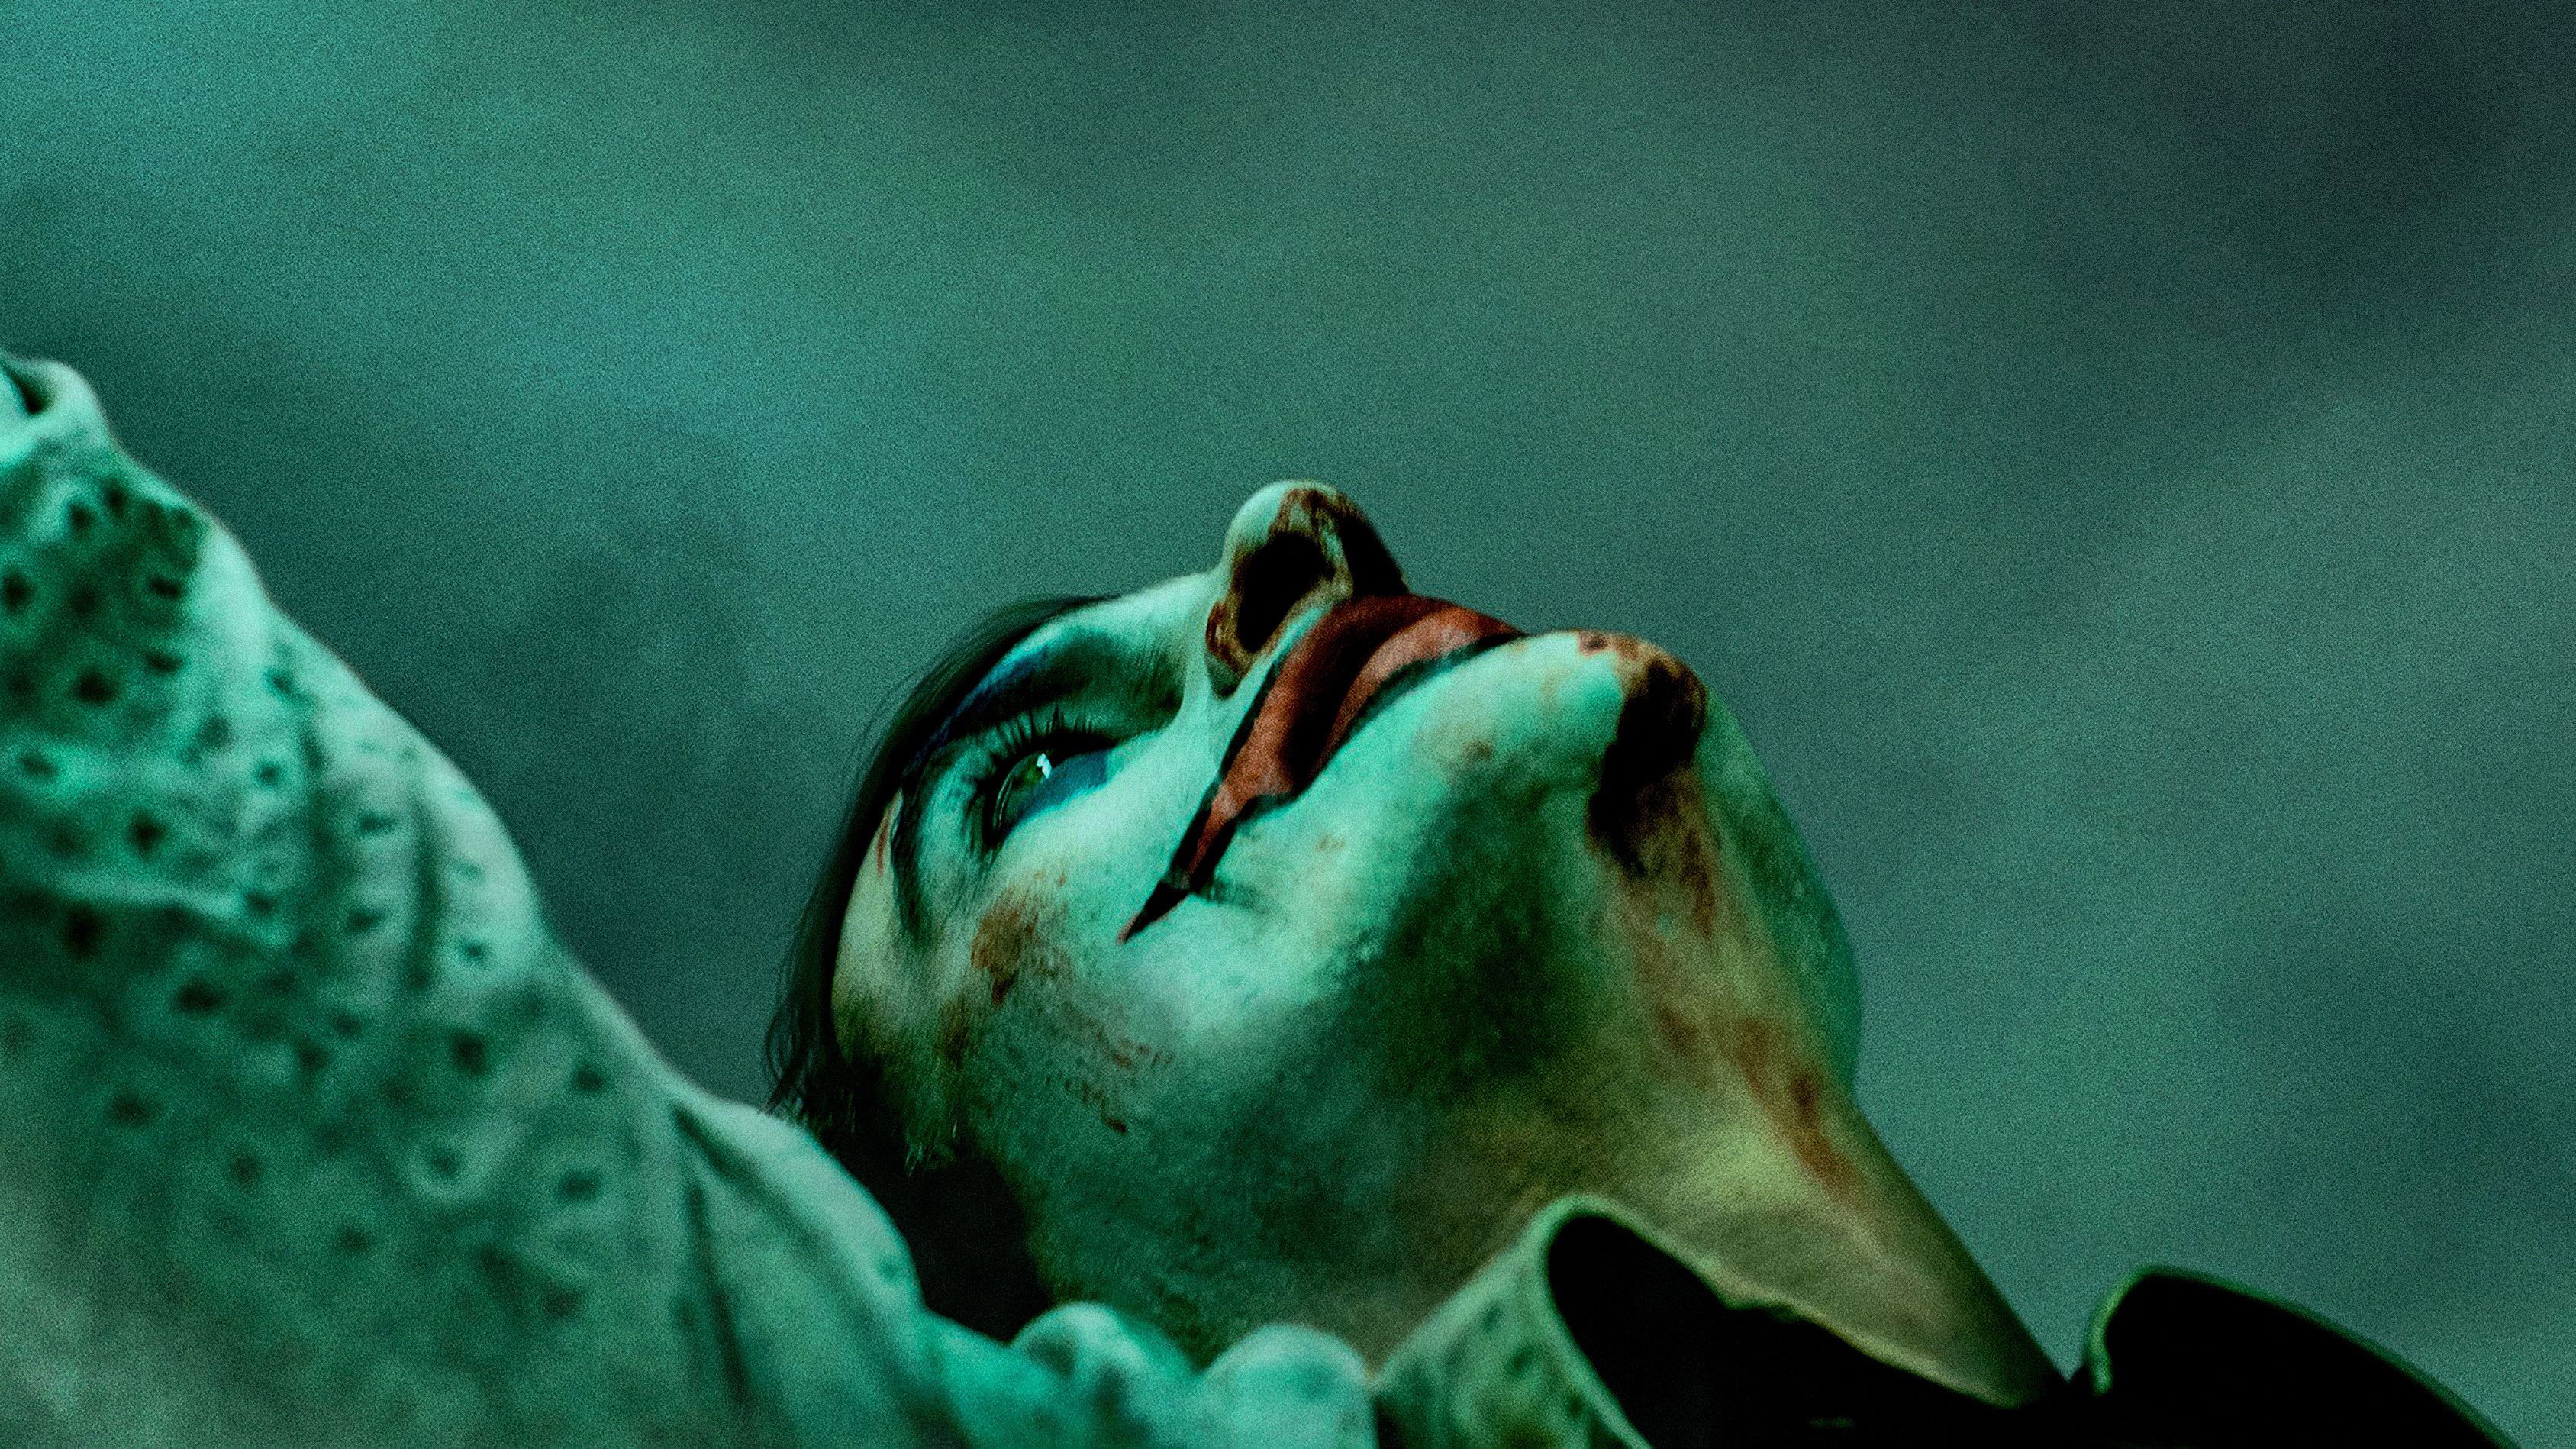 Joker Joaquin Phoenix 2019 4k, HD Movies, 4k Wallpaper, Image, Background, Photo and Picture